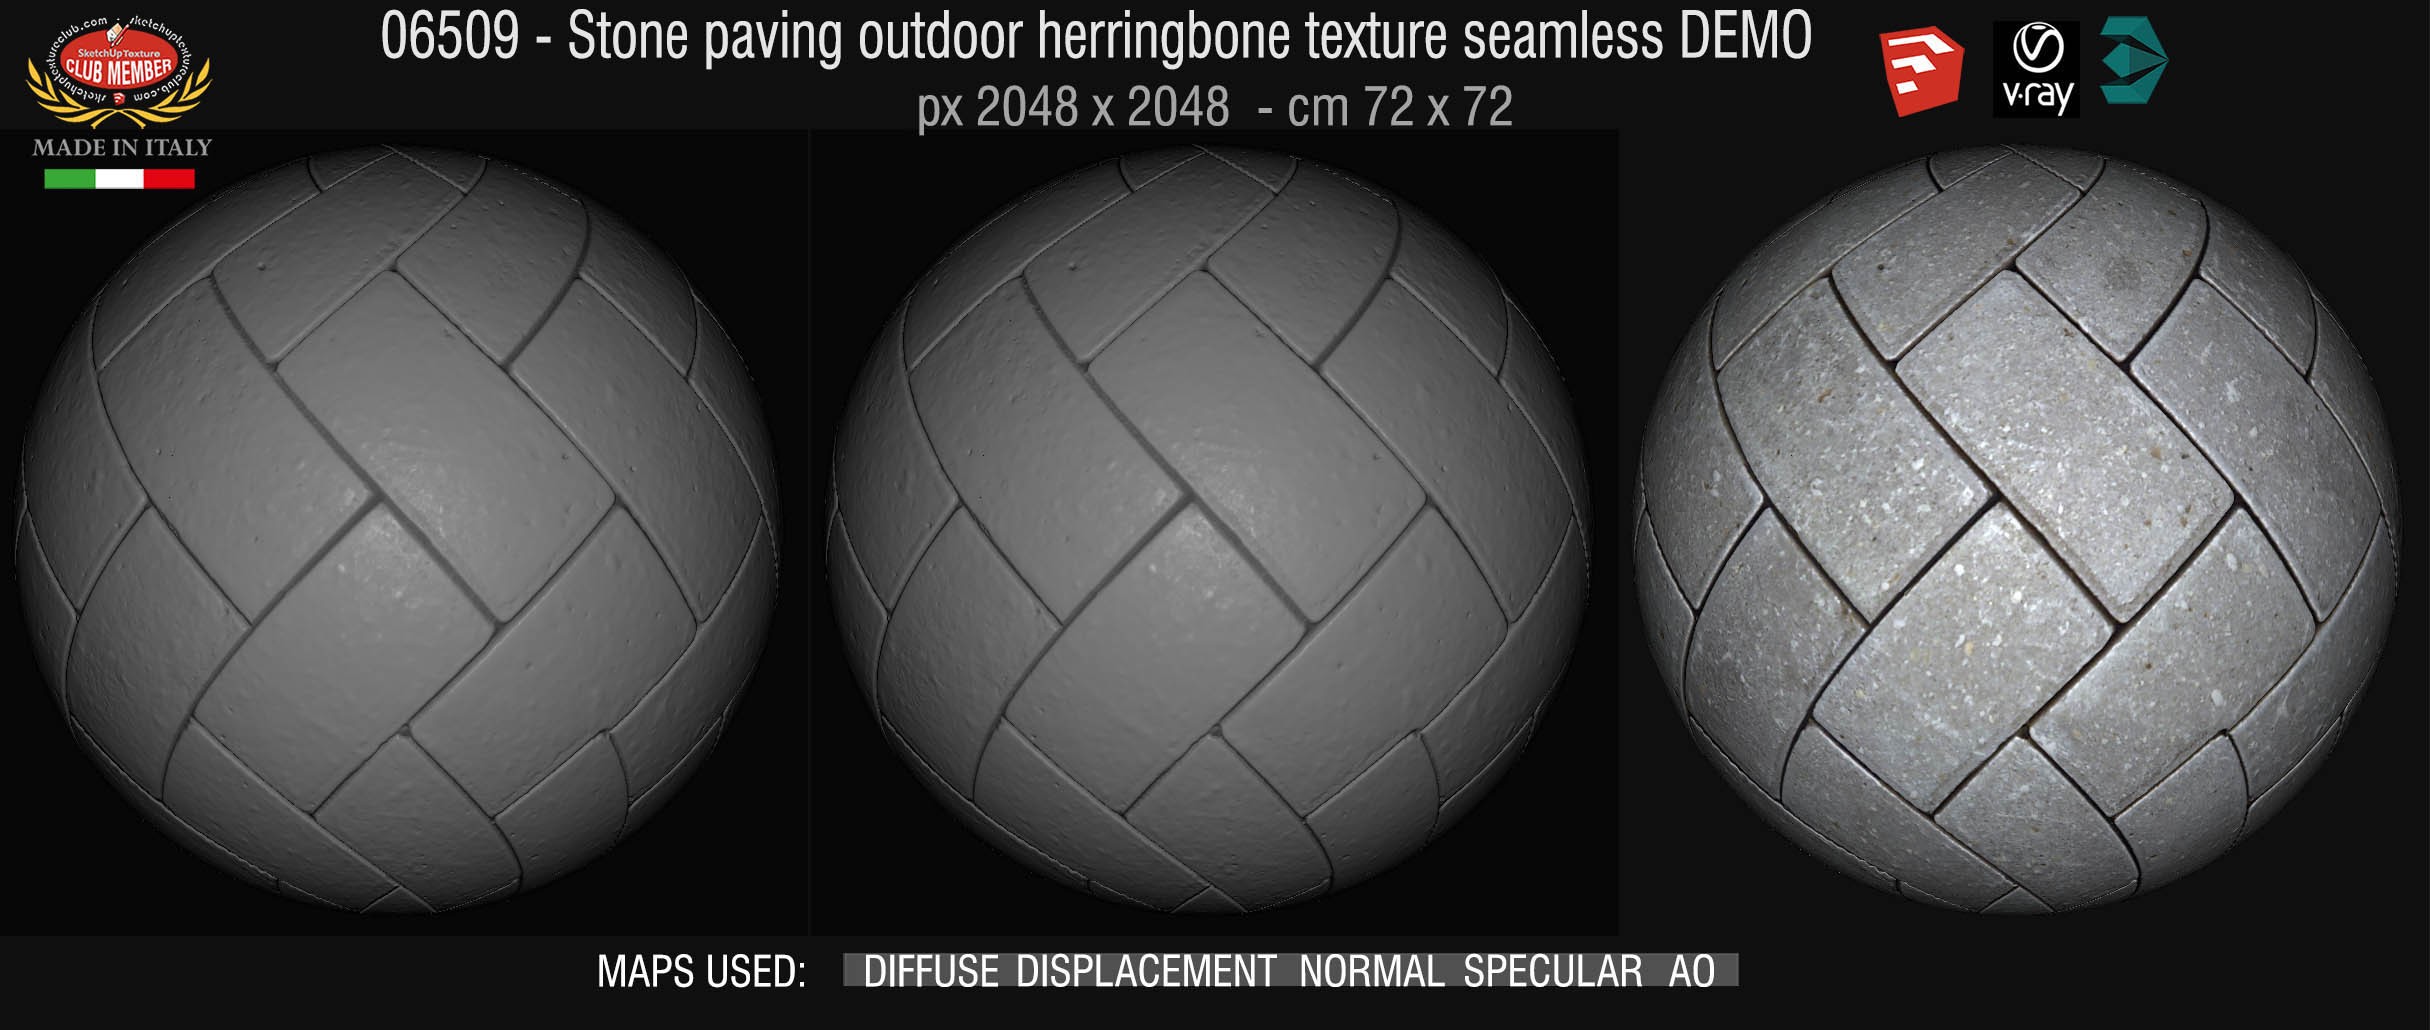 06509 Stone paving outdoor herringbone texture seamless + maps DEMO